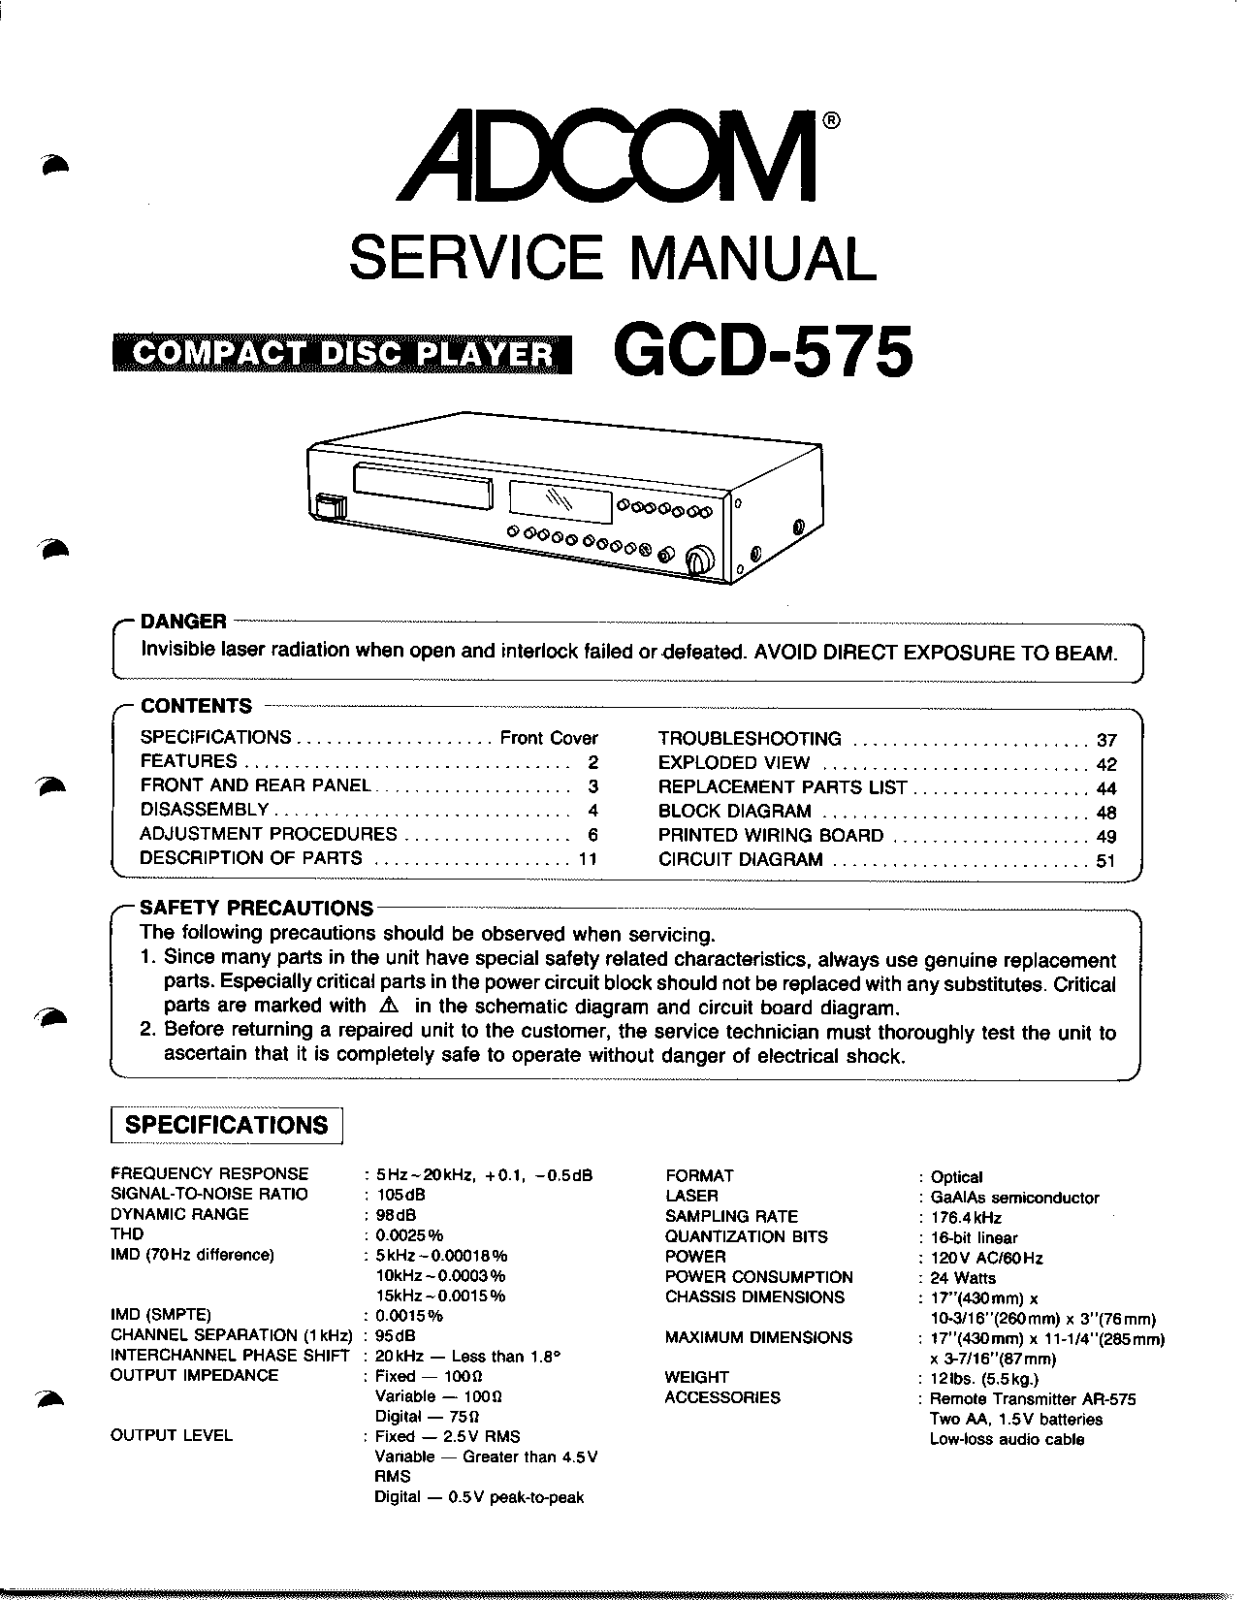 Adcom GCD-575 Service manual